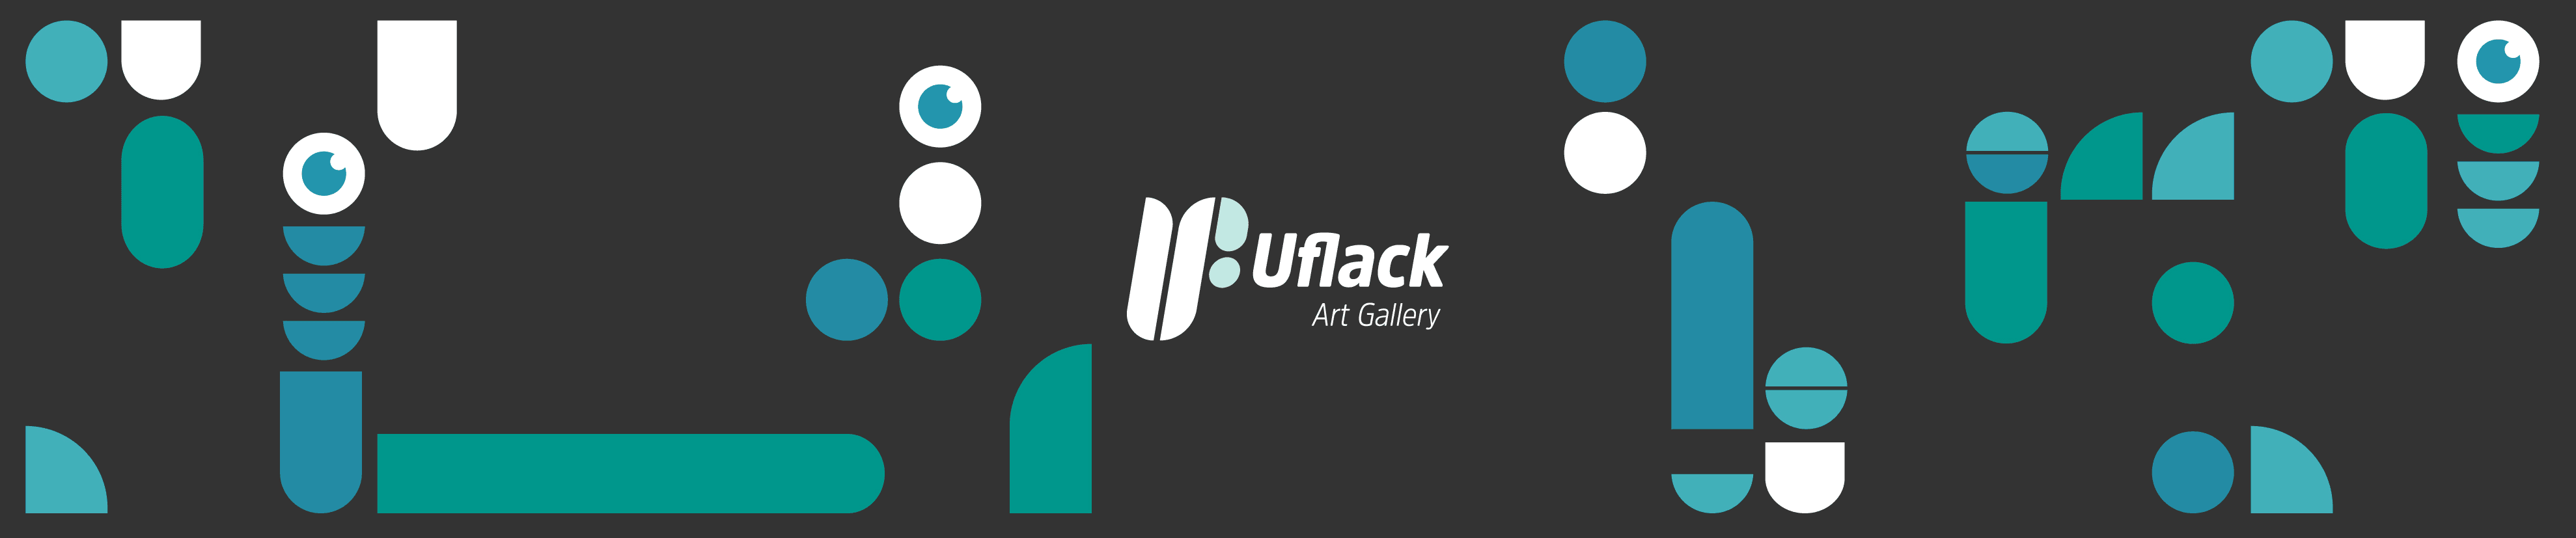 Uflack_Art_Gallery banner